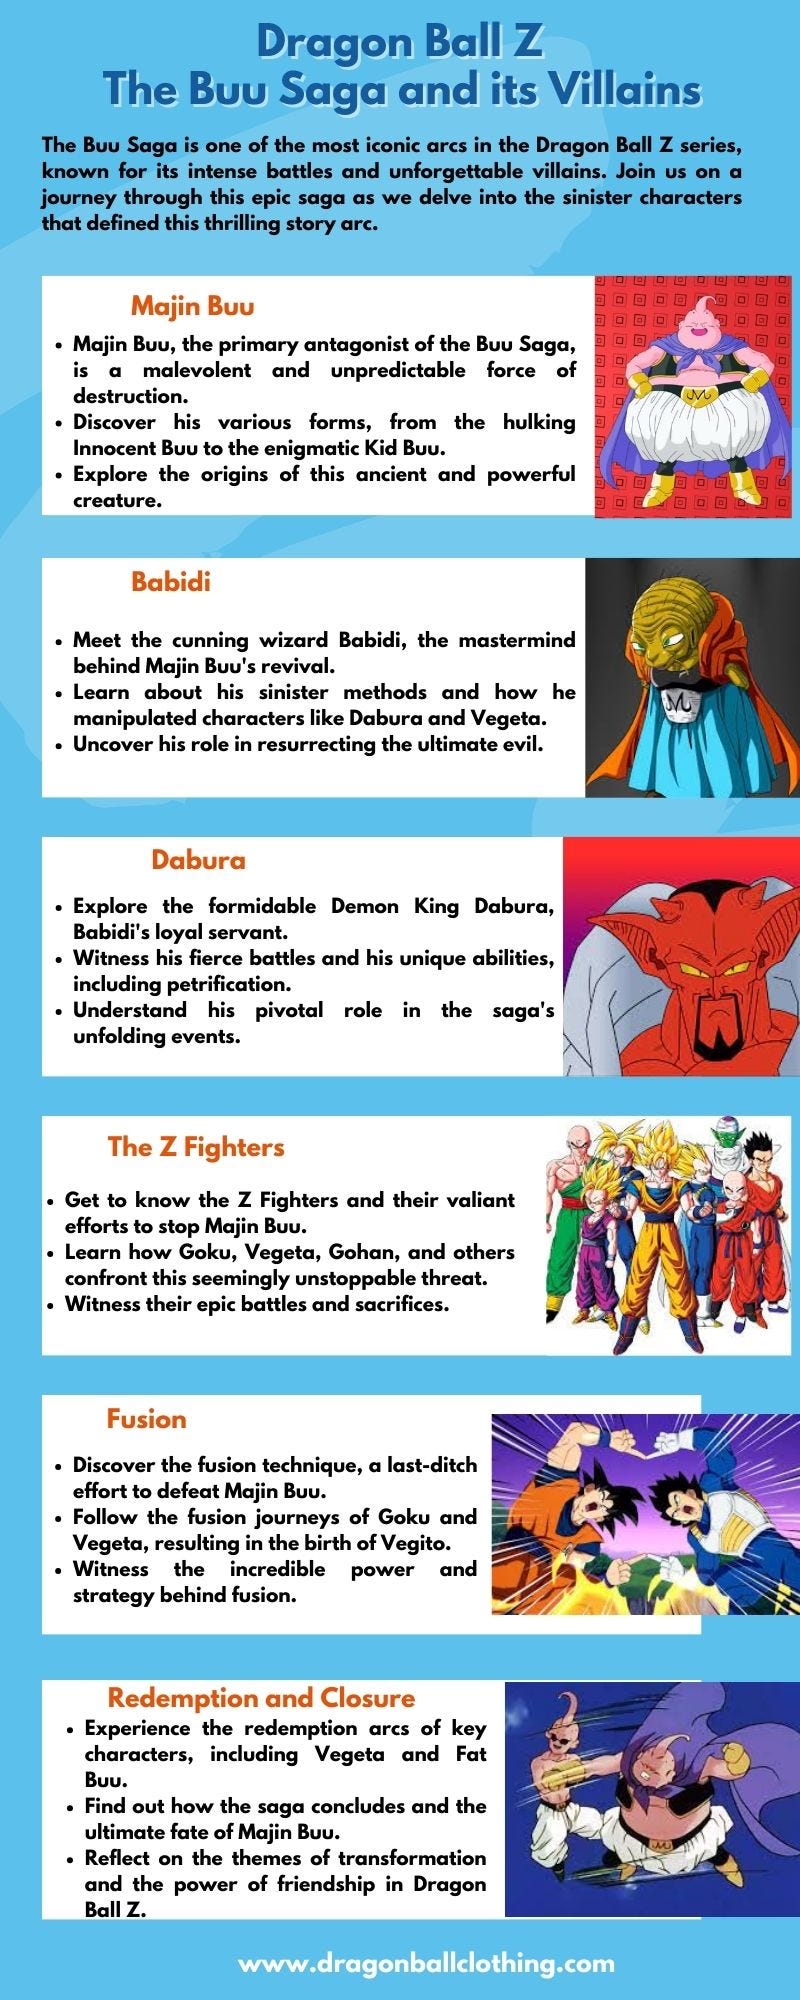 Vegeta (Dragon Ball) - Incredible Characters Wiki